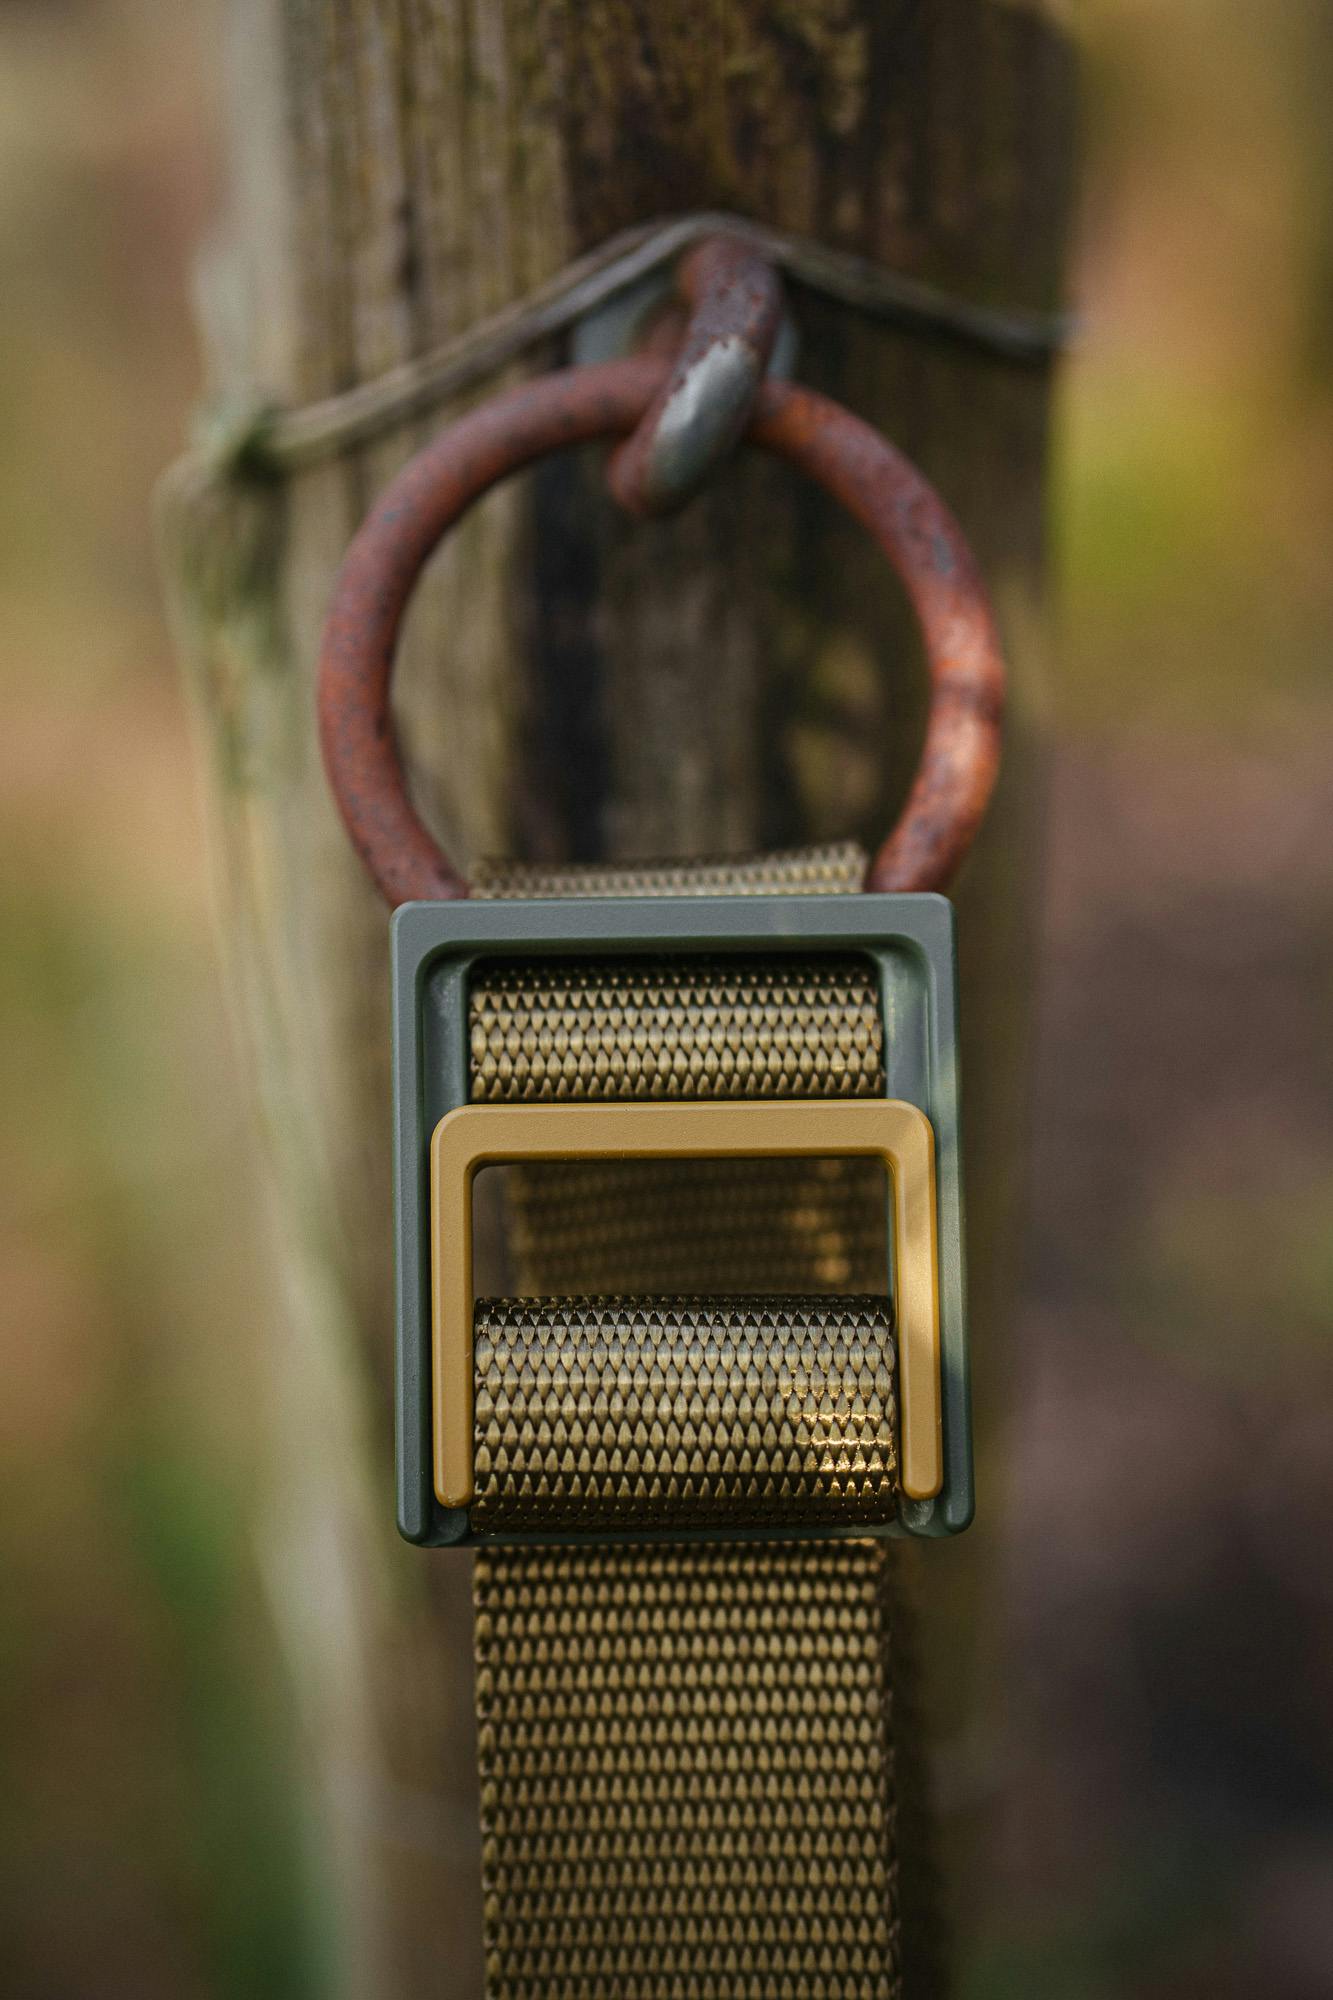 An Austere lock belt on a post.